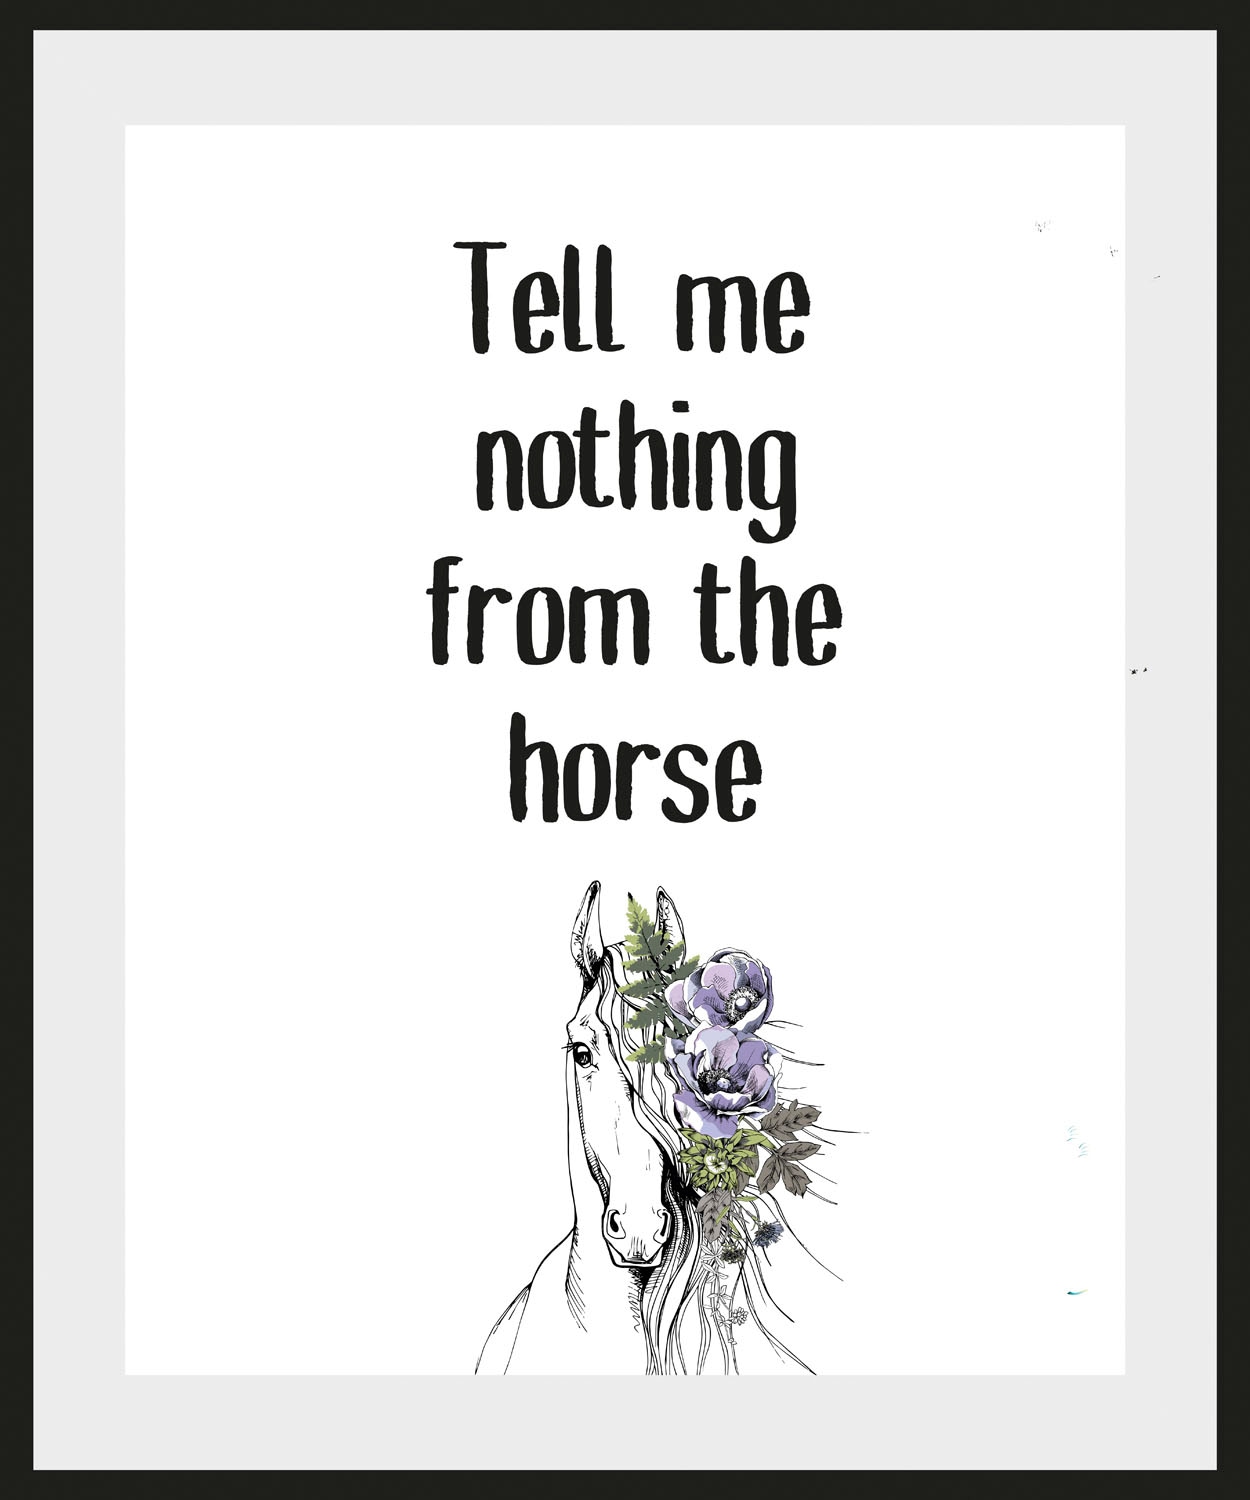 bestellen the horse«, queence »Tell (1 nothing Schriftzug, me St.) Bild from Rechnung auf